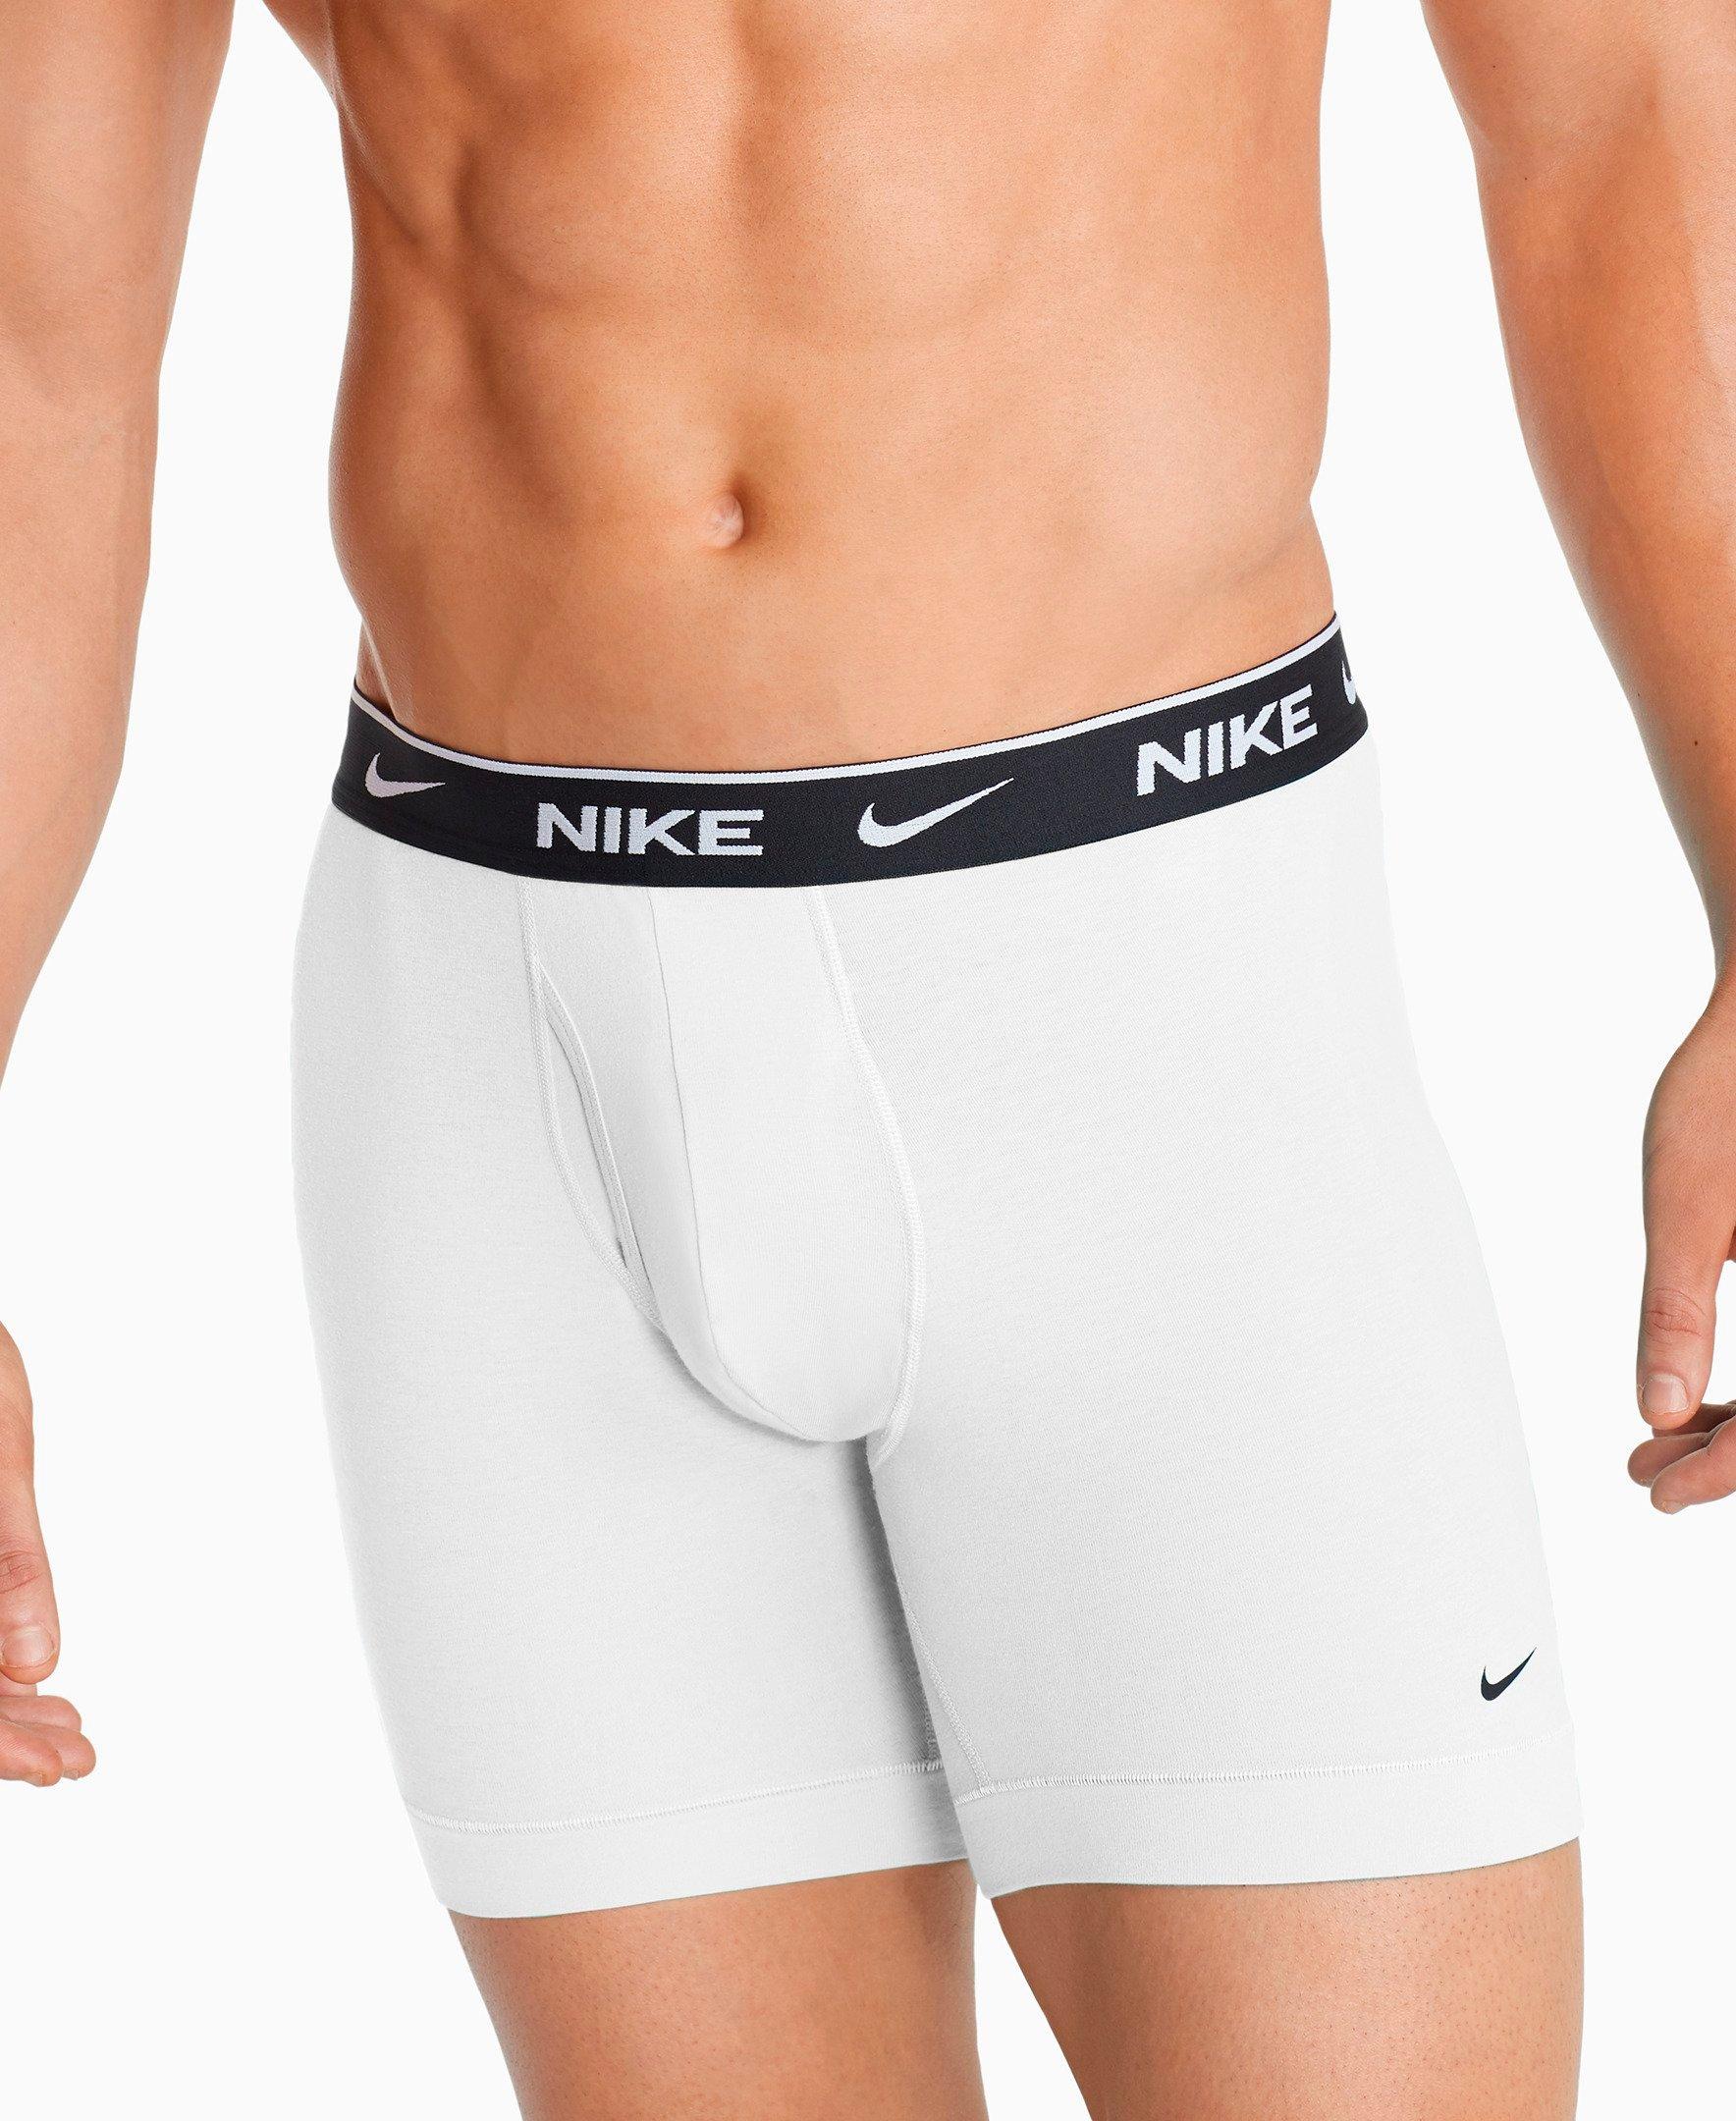 nike 9 inch underwear